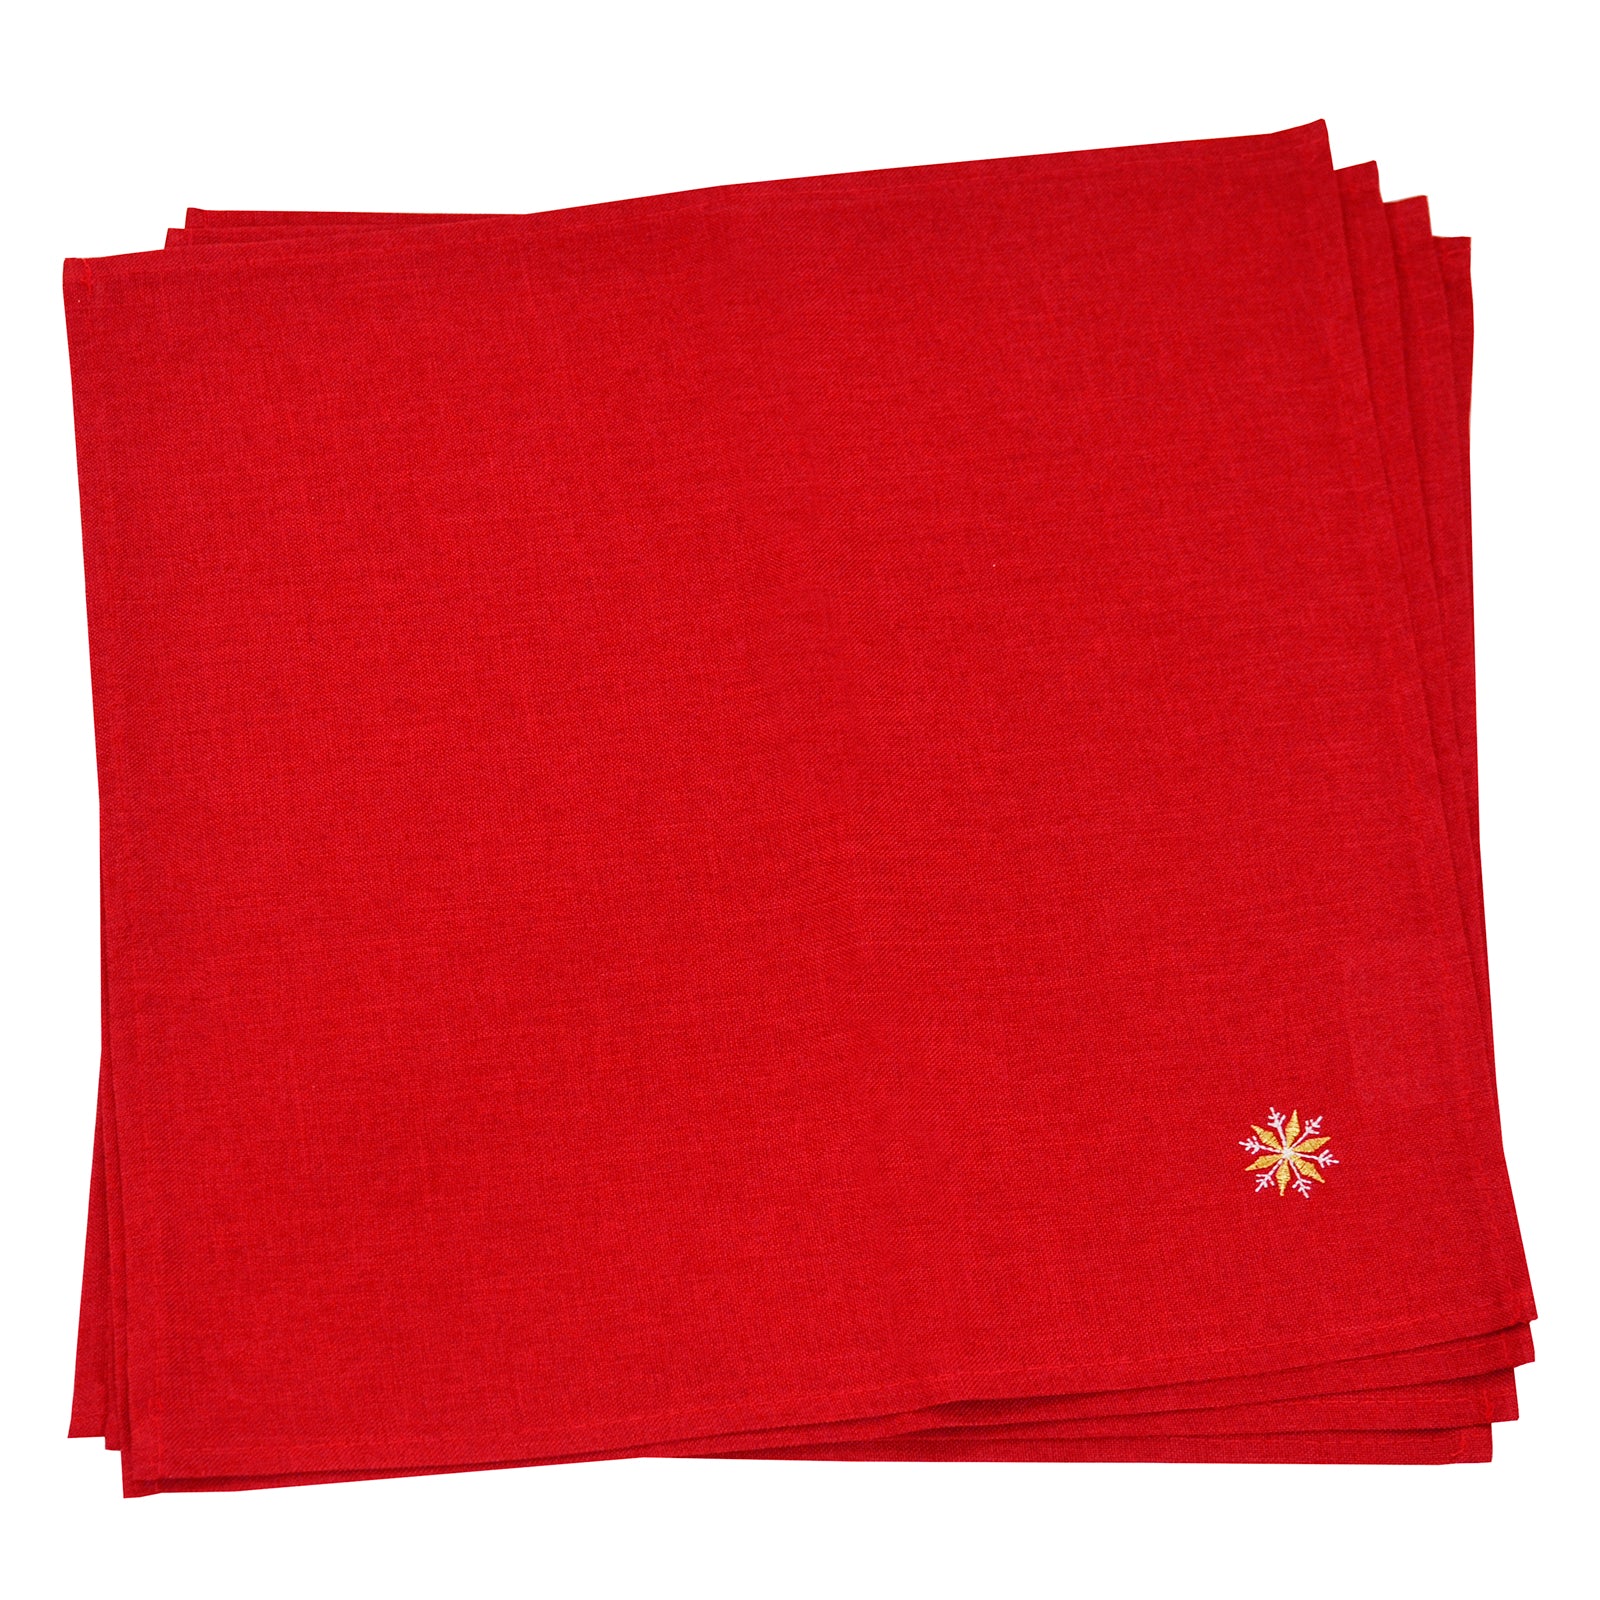 Mr Crimbo Christmas Baubles White Red Tablecloth Napkins - MrCrimbo.co.uk -XS6563 - Red -christmas napkins